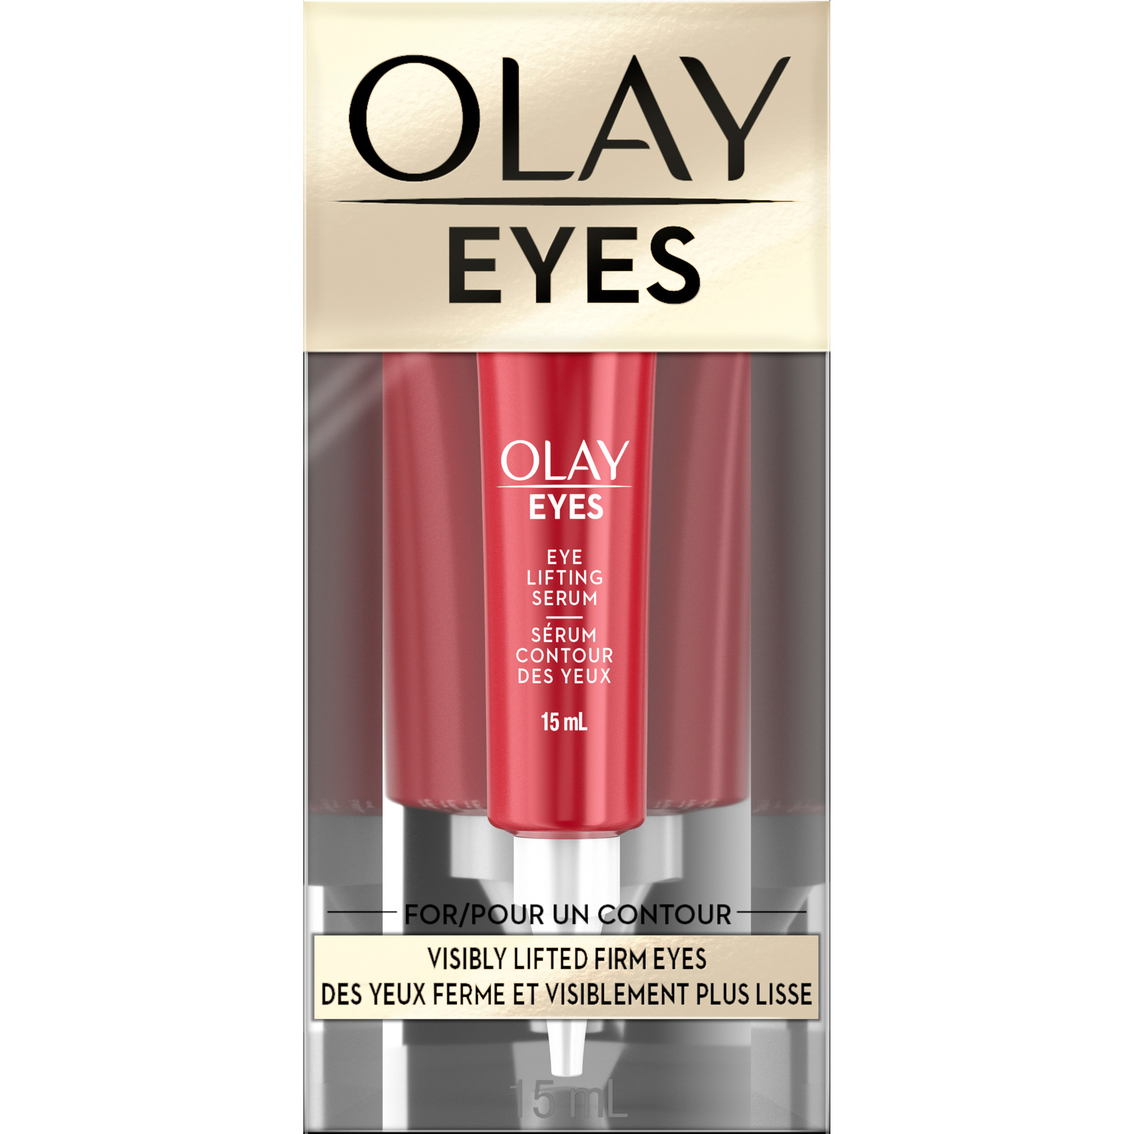 Olay Eye Lifting Serum | Eye Treatment | Beauty & Health ...